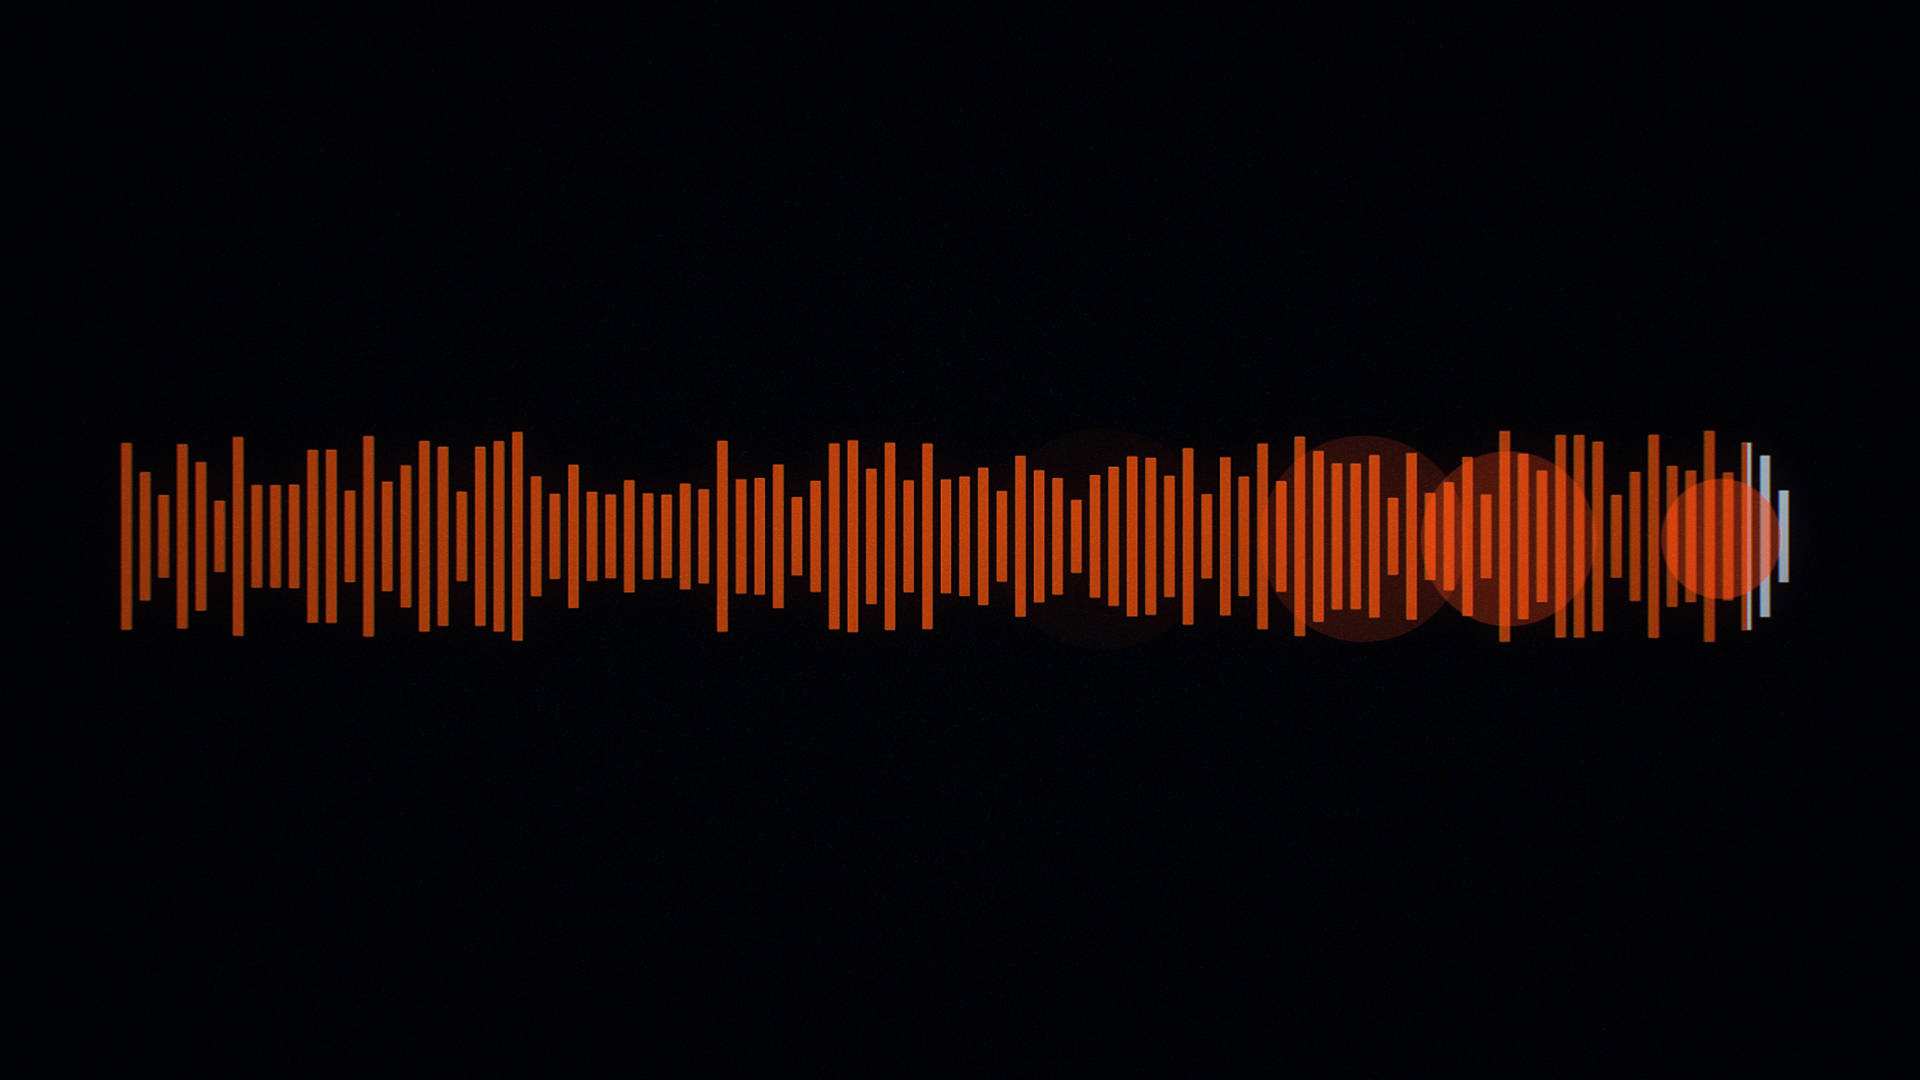 SoundCloud Audio Streaming Bars Wallpaper